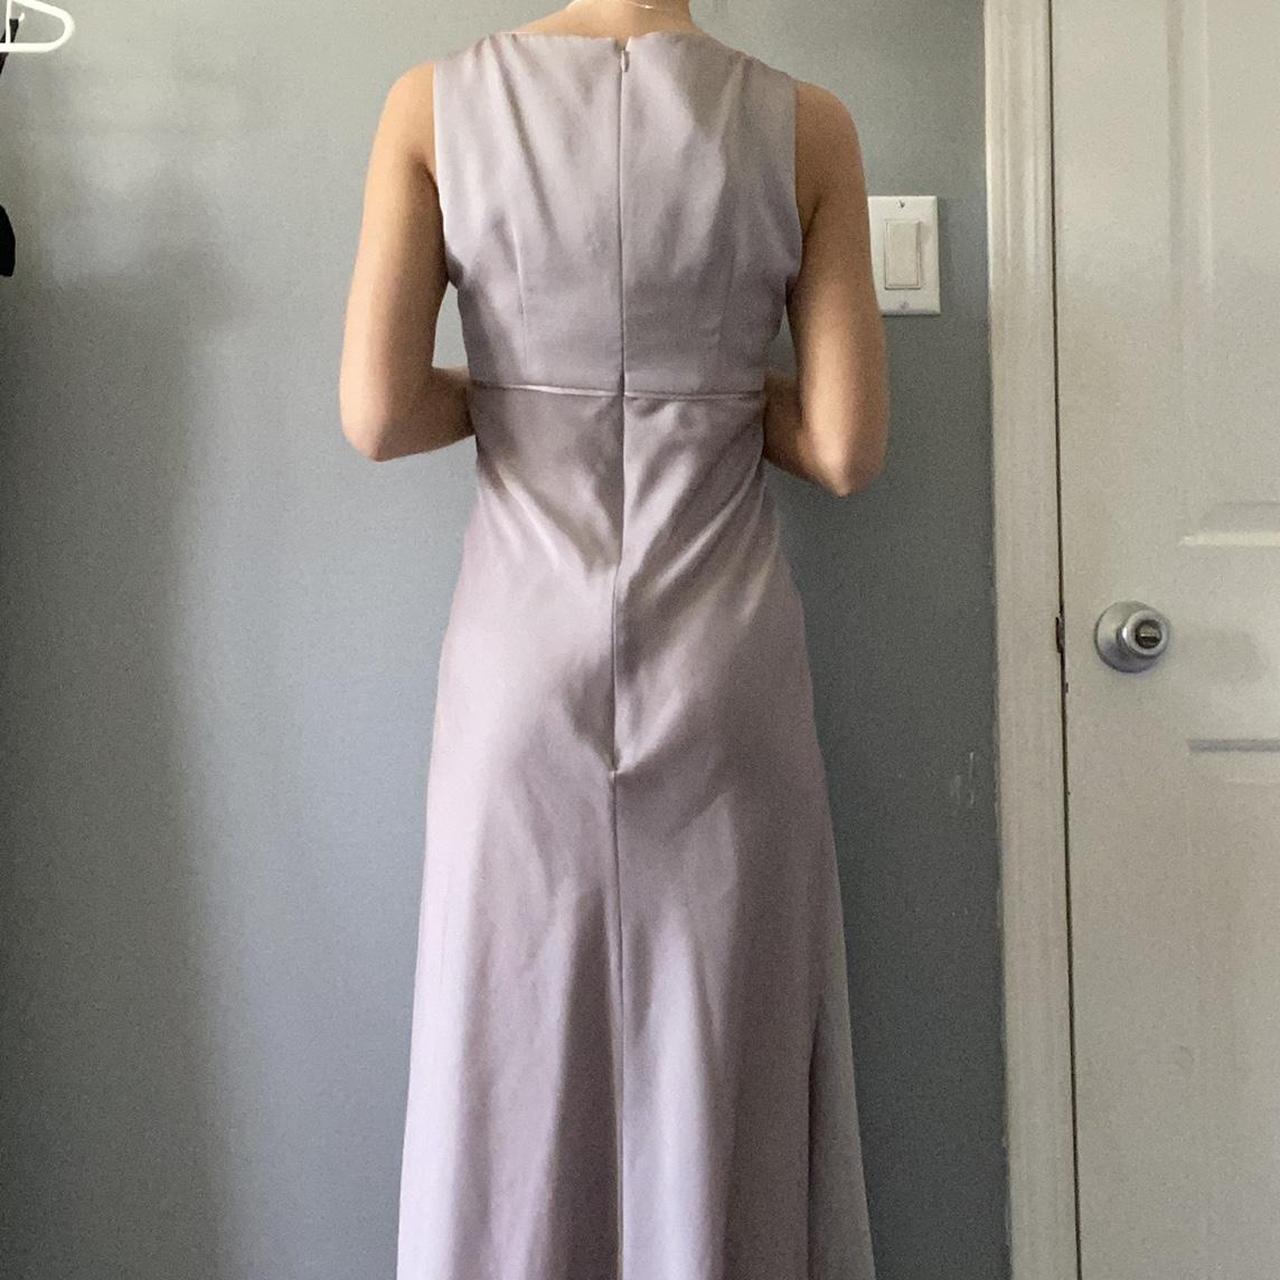 Product Image 2 - Lavender maxi dress! ❗️NO PAYPAL❗️

Vintage